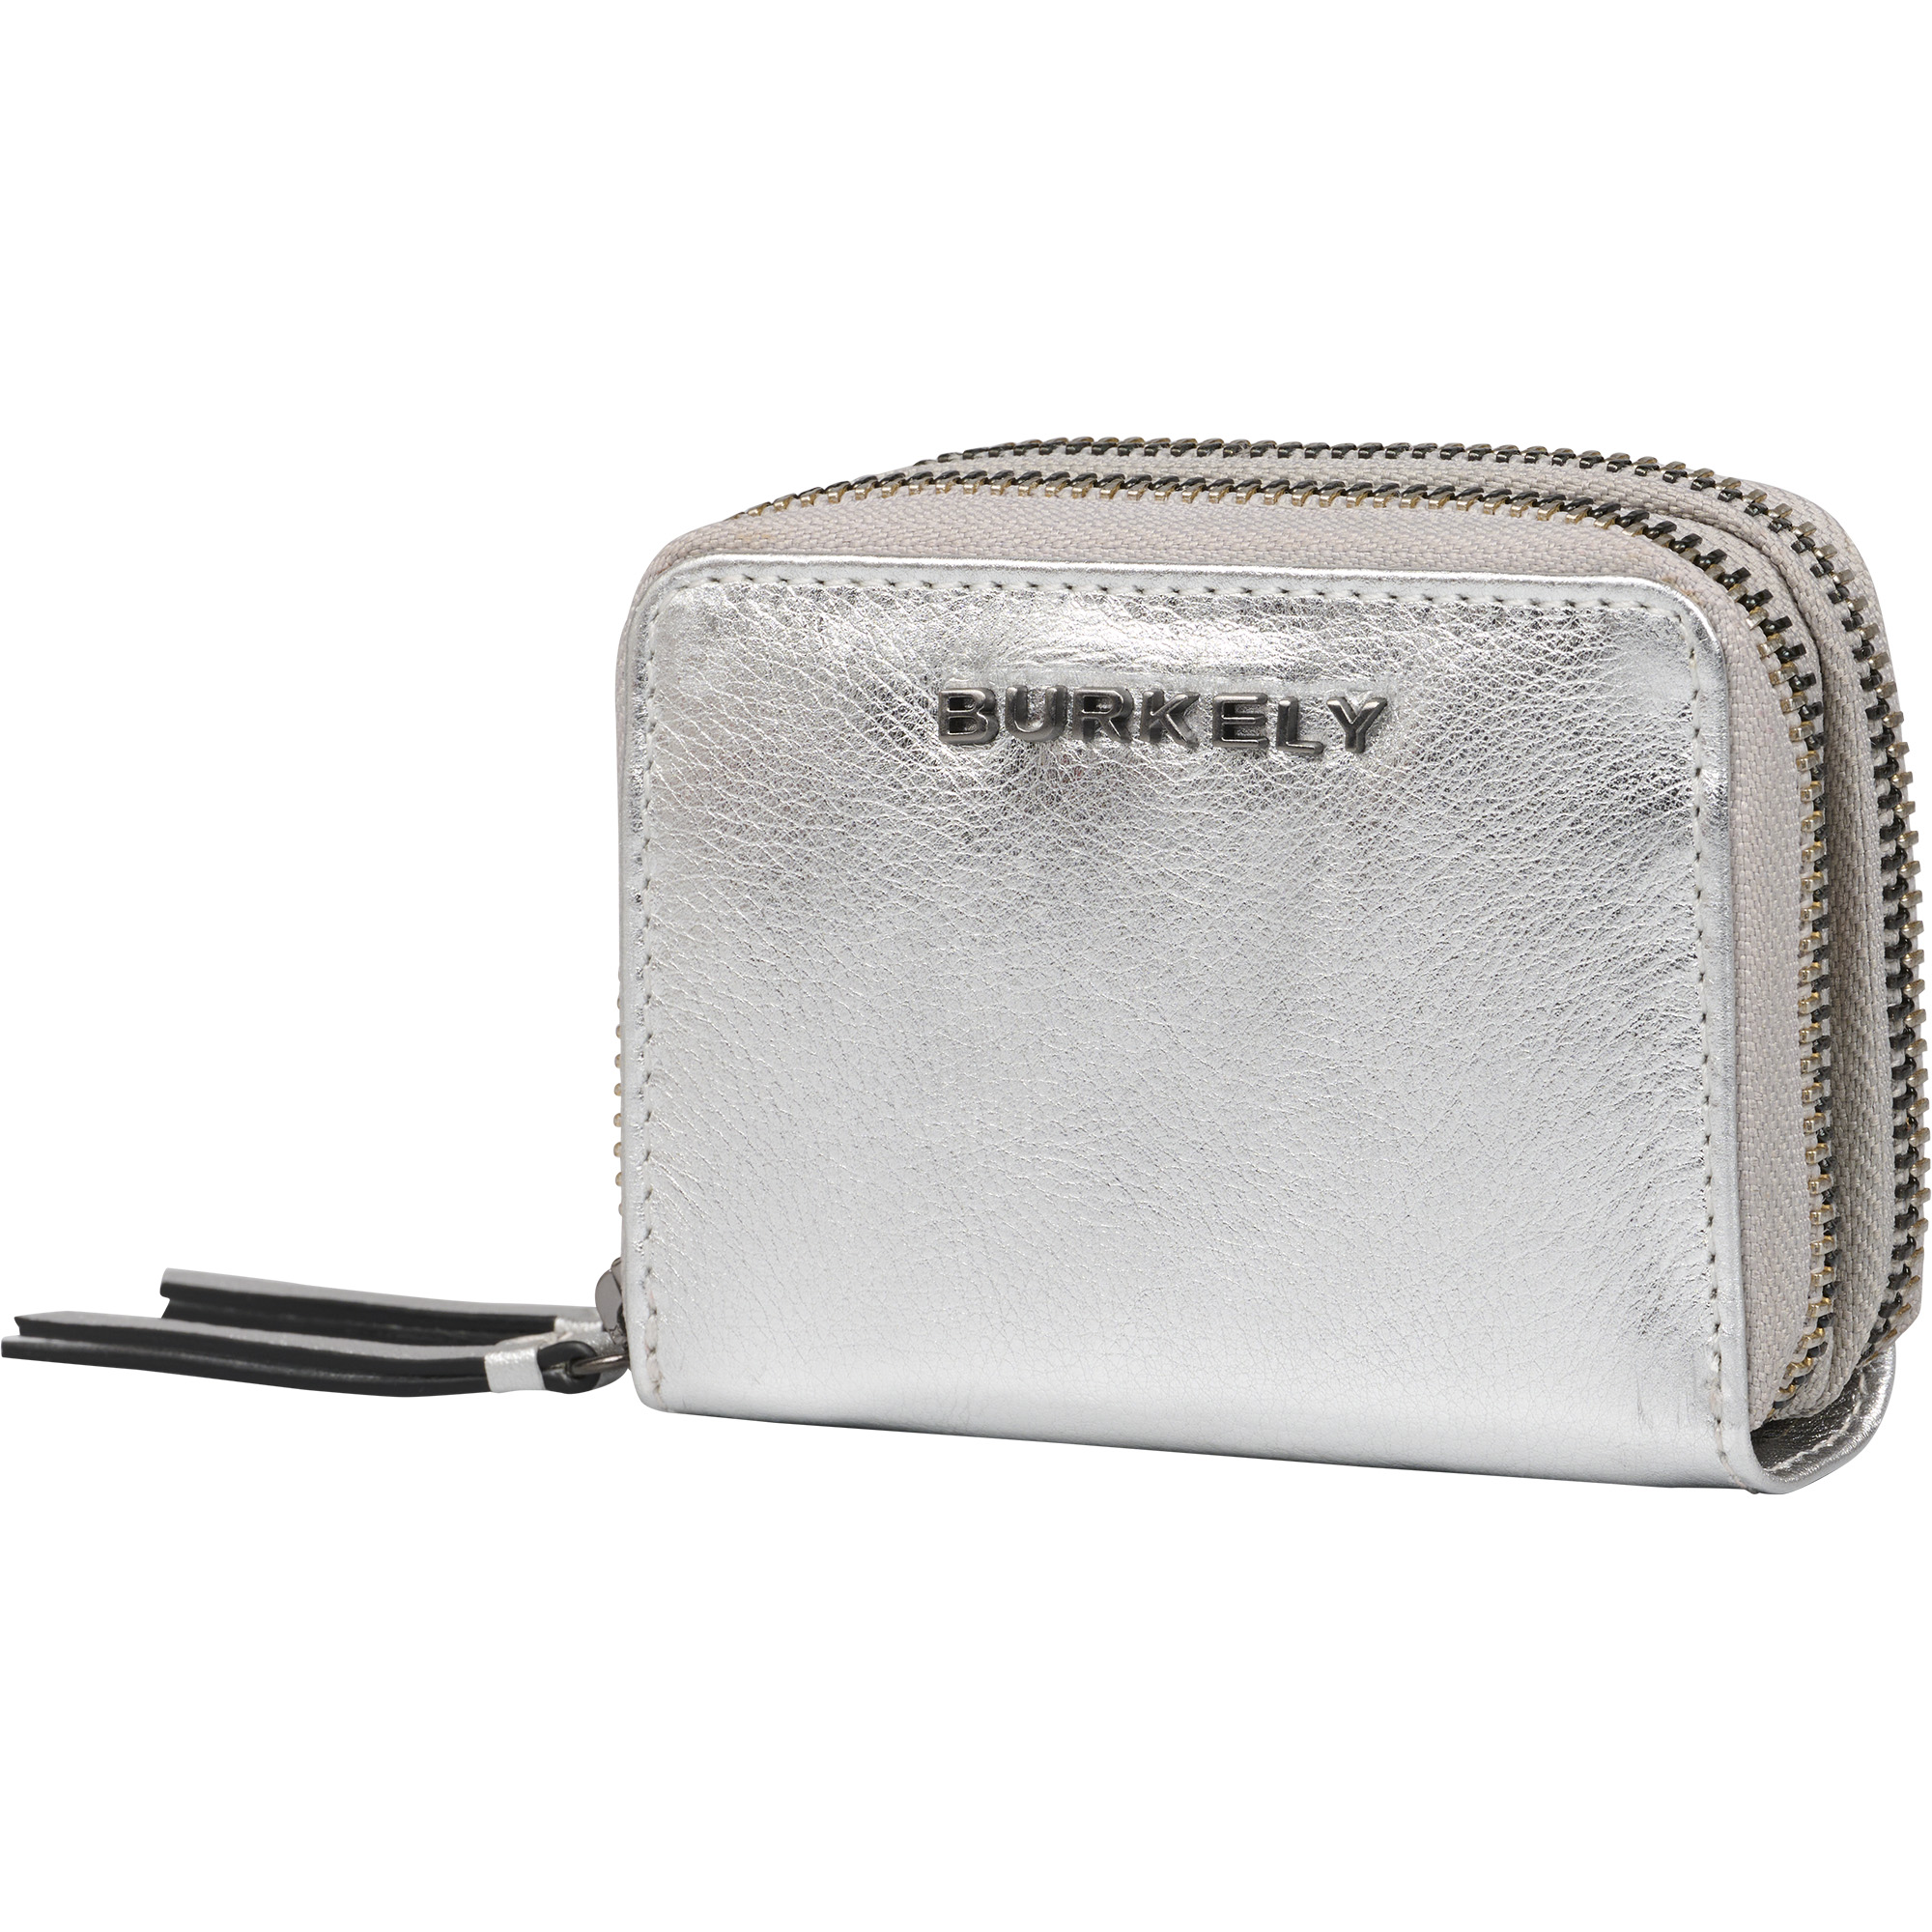 Burkely 1000719 Double Zip Wallet 64.11 Silver